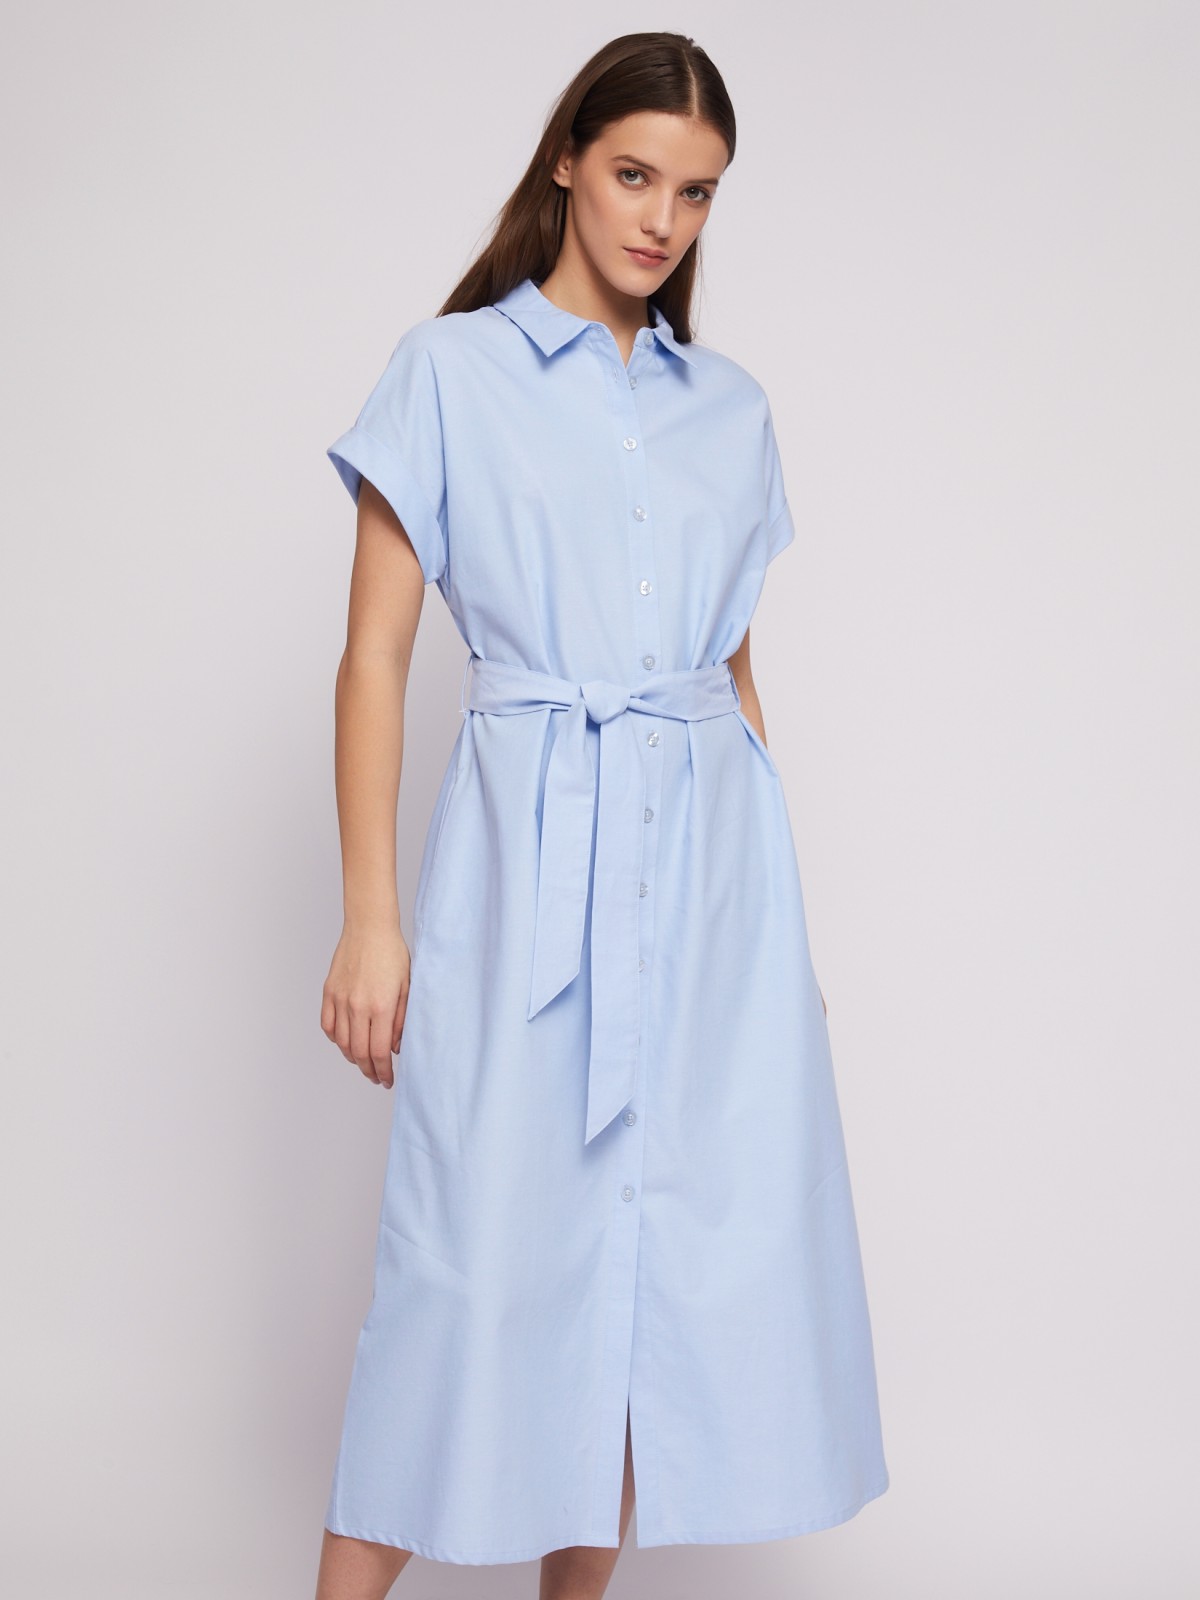 Платье-рубашка из хлопка с коротким рукавом и поясом zolla 024218262353, цвет светло-голубой, размер XS - фото 1